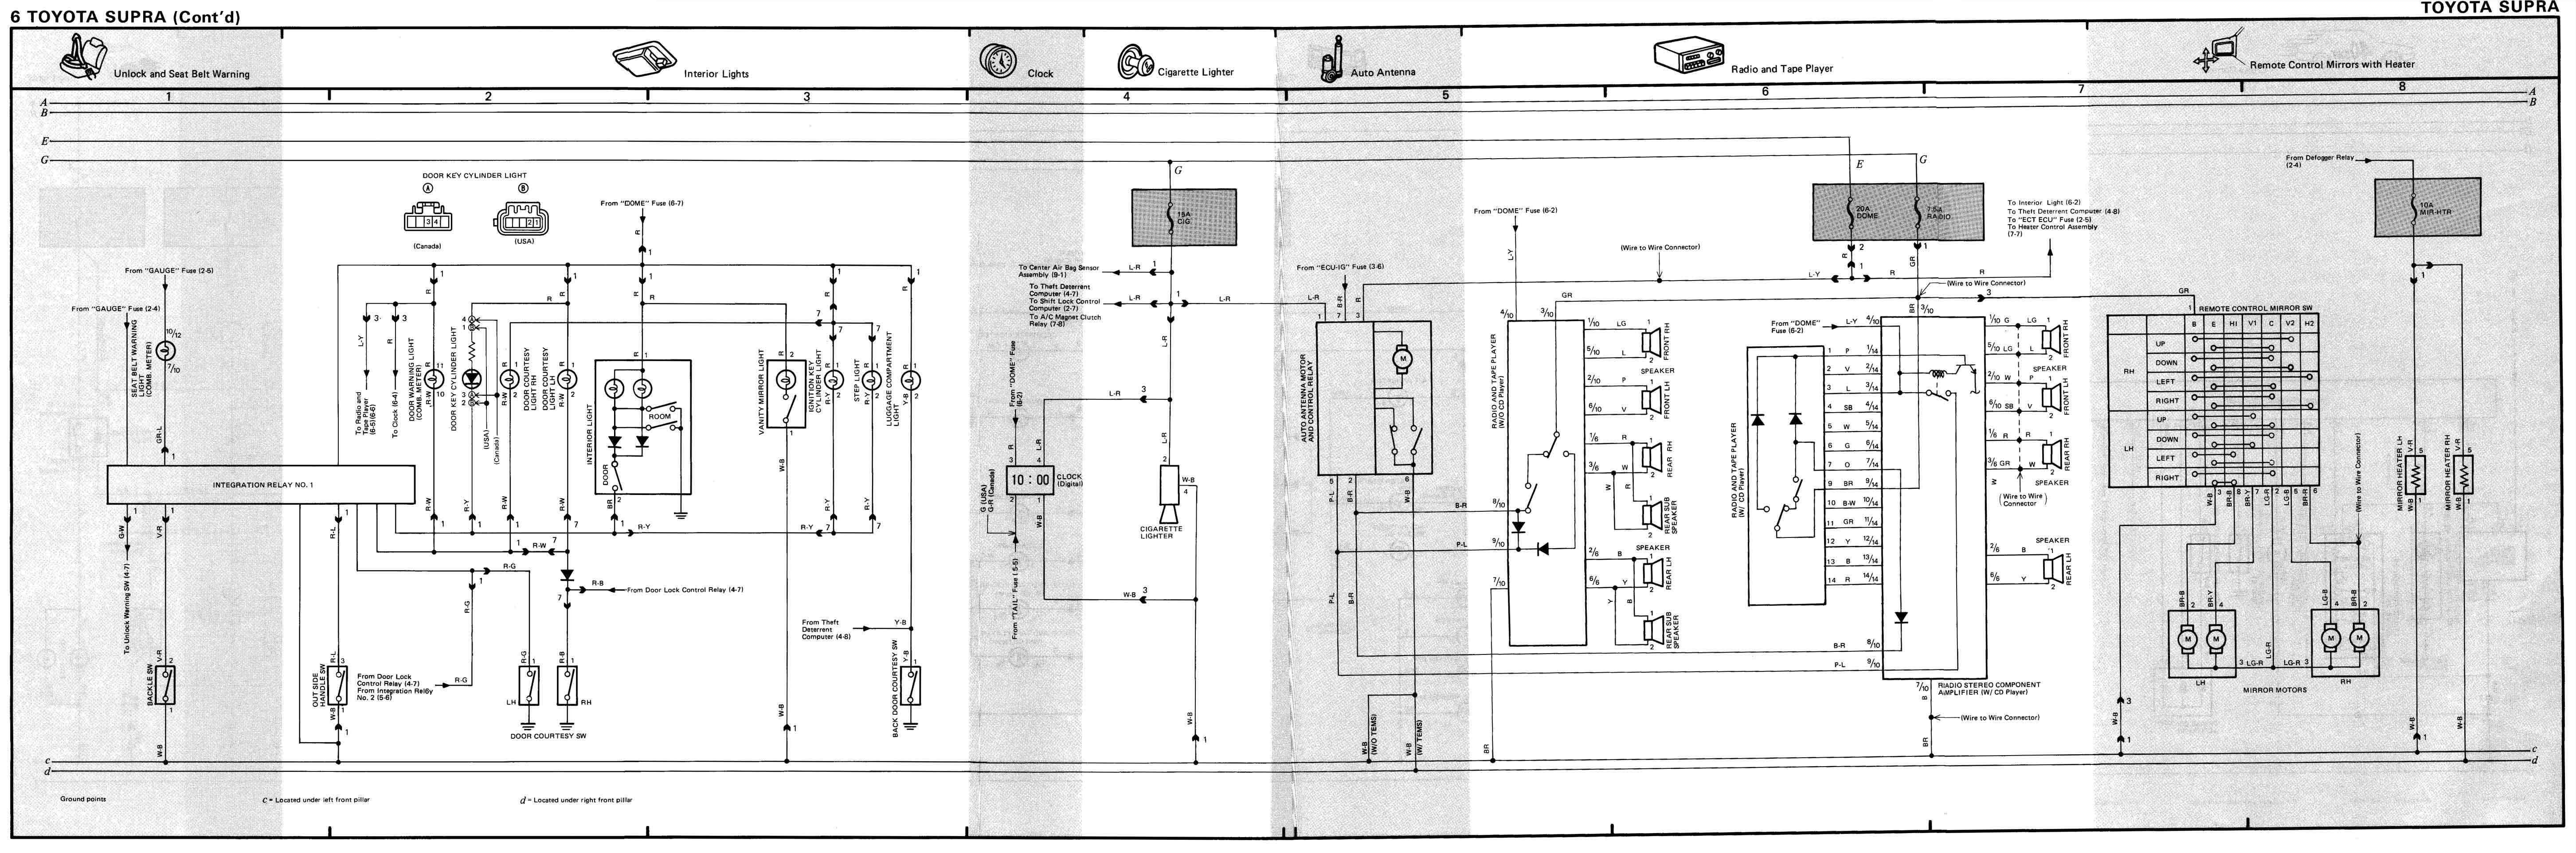 1990 toyota Camry Wiring Diagram 1987 toyota Wiring Diagram Trusted Wiring Diagram Of 1990 toyota Camry Wiring Diagram